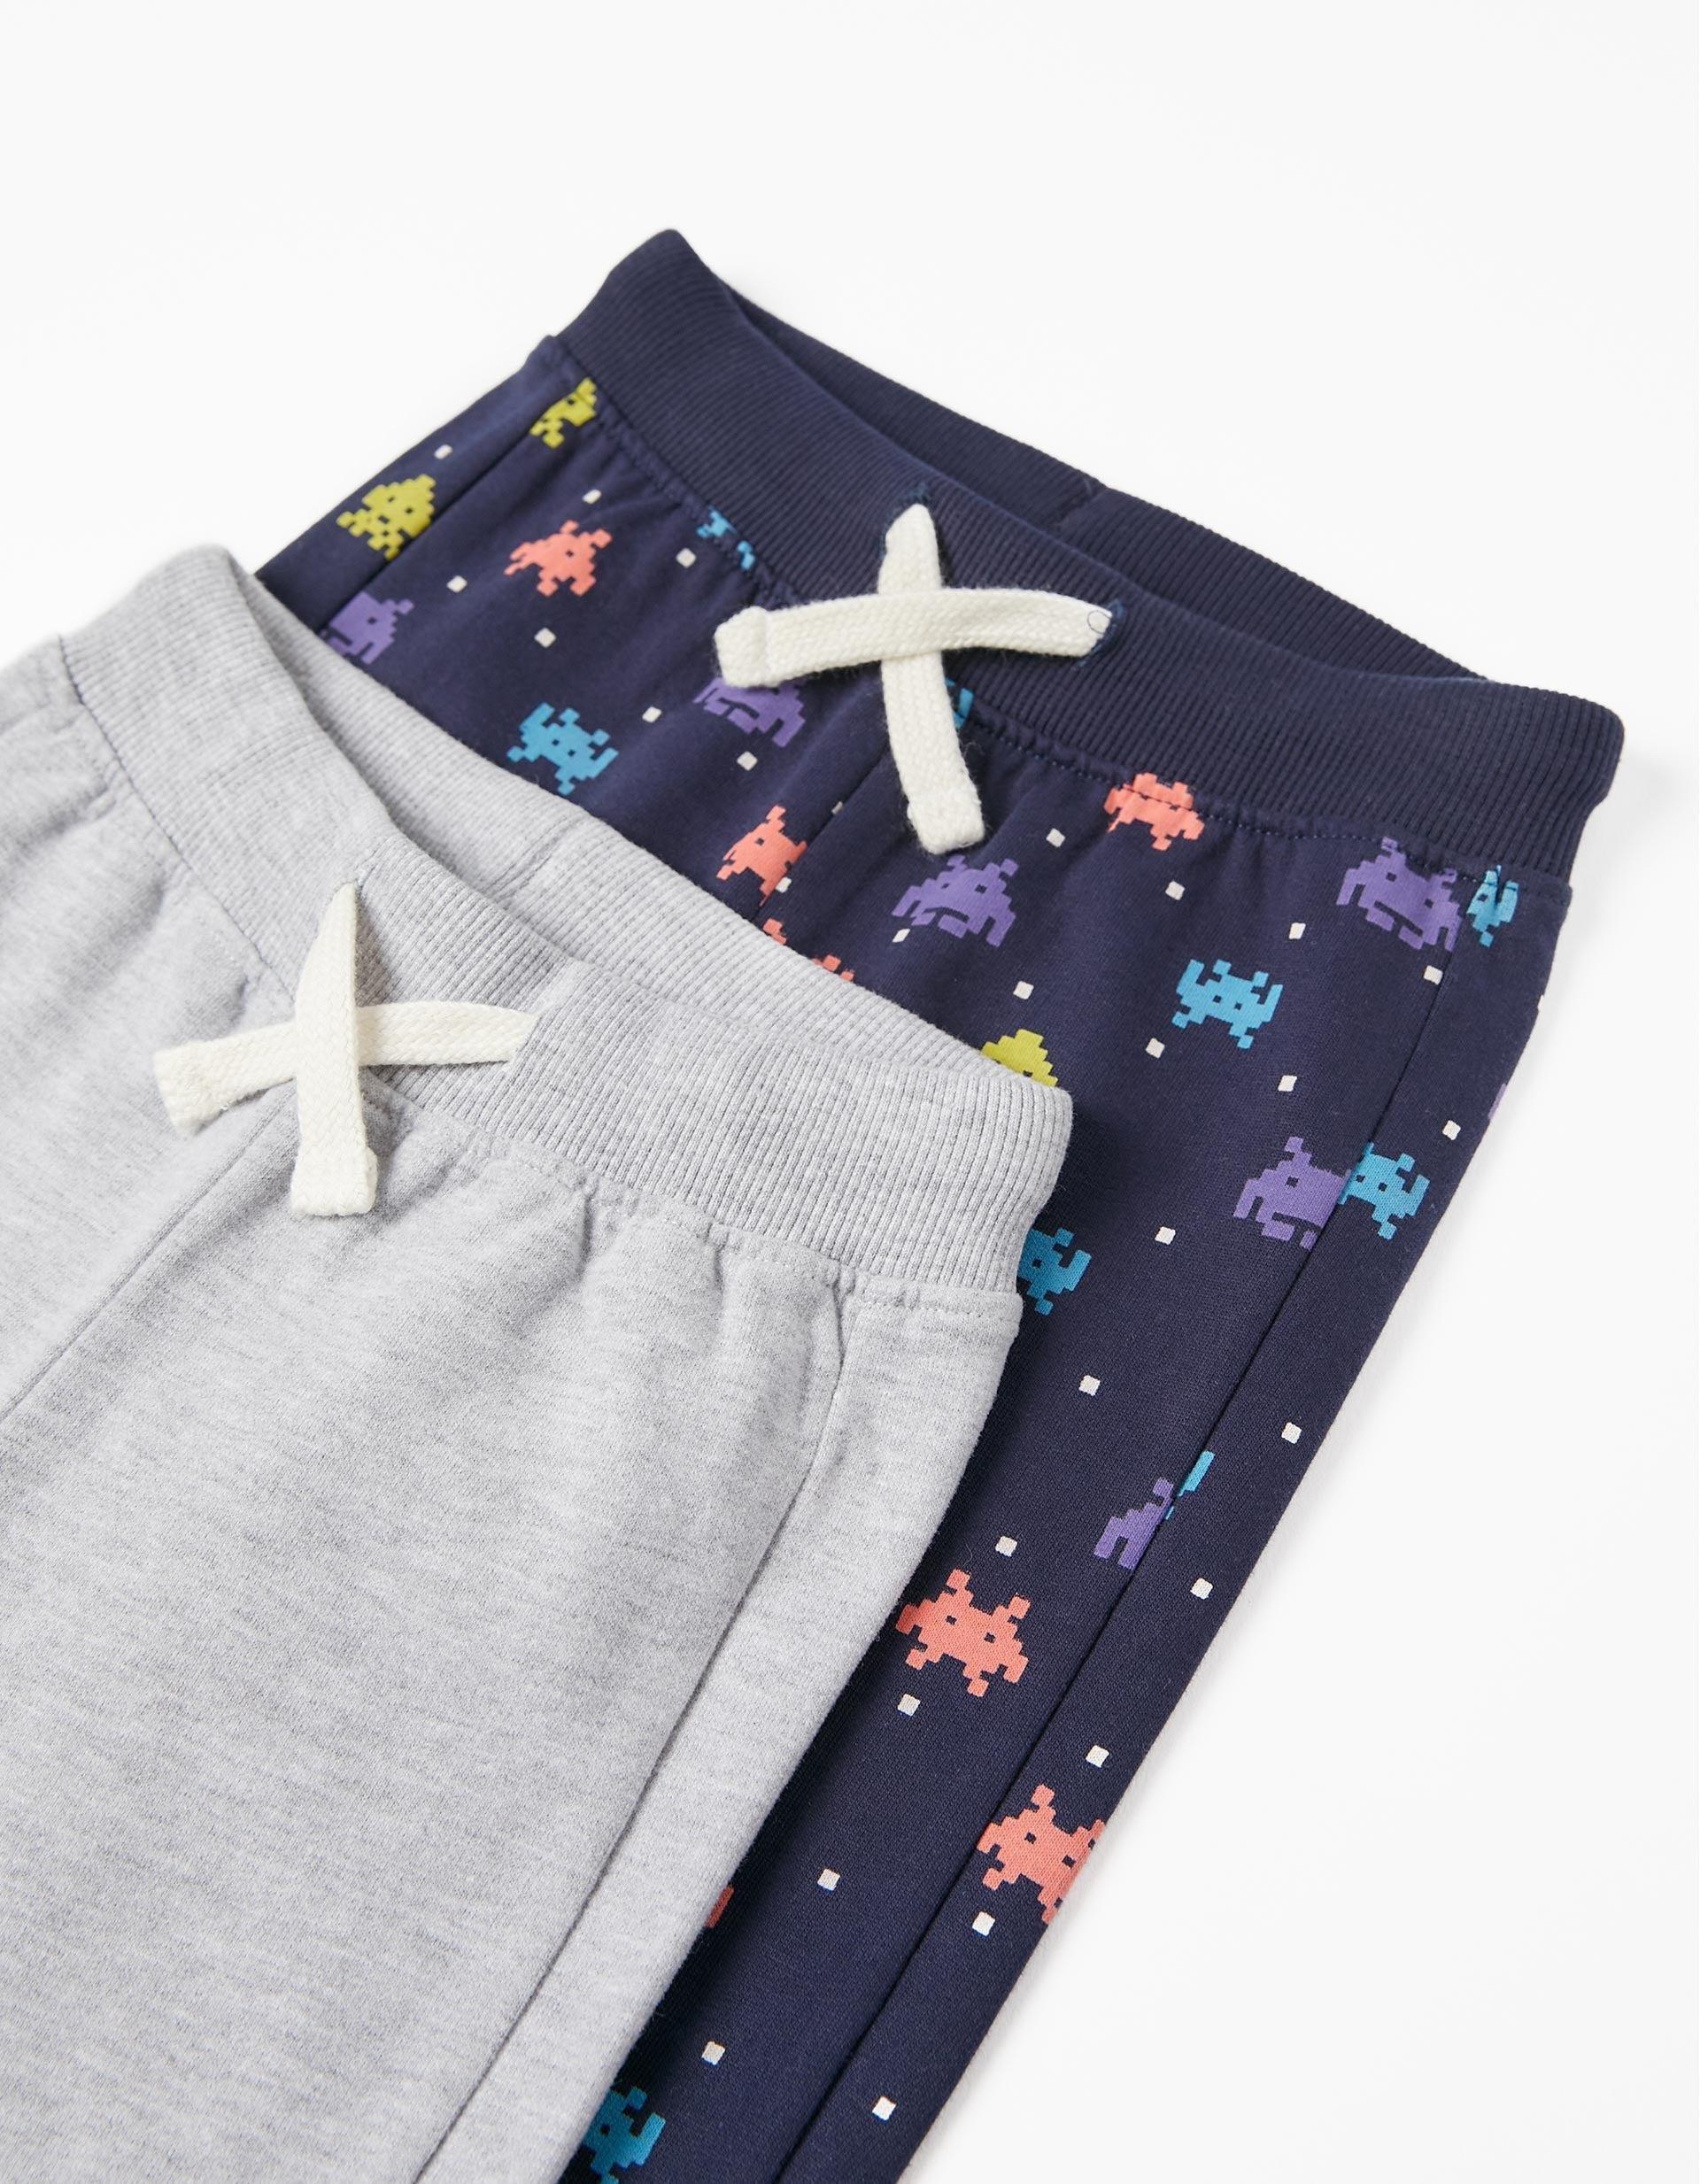 Gant - Multicolour Printed Pajamas Set, Set Of 3, Baby Boys